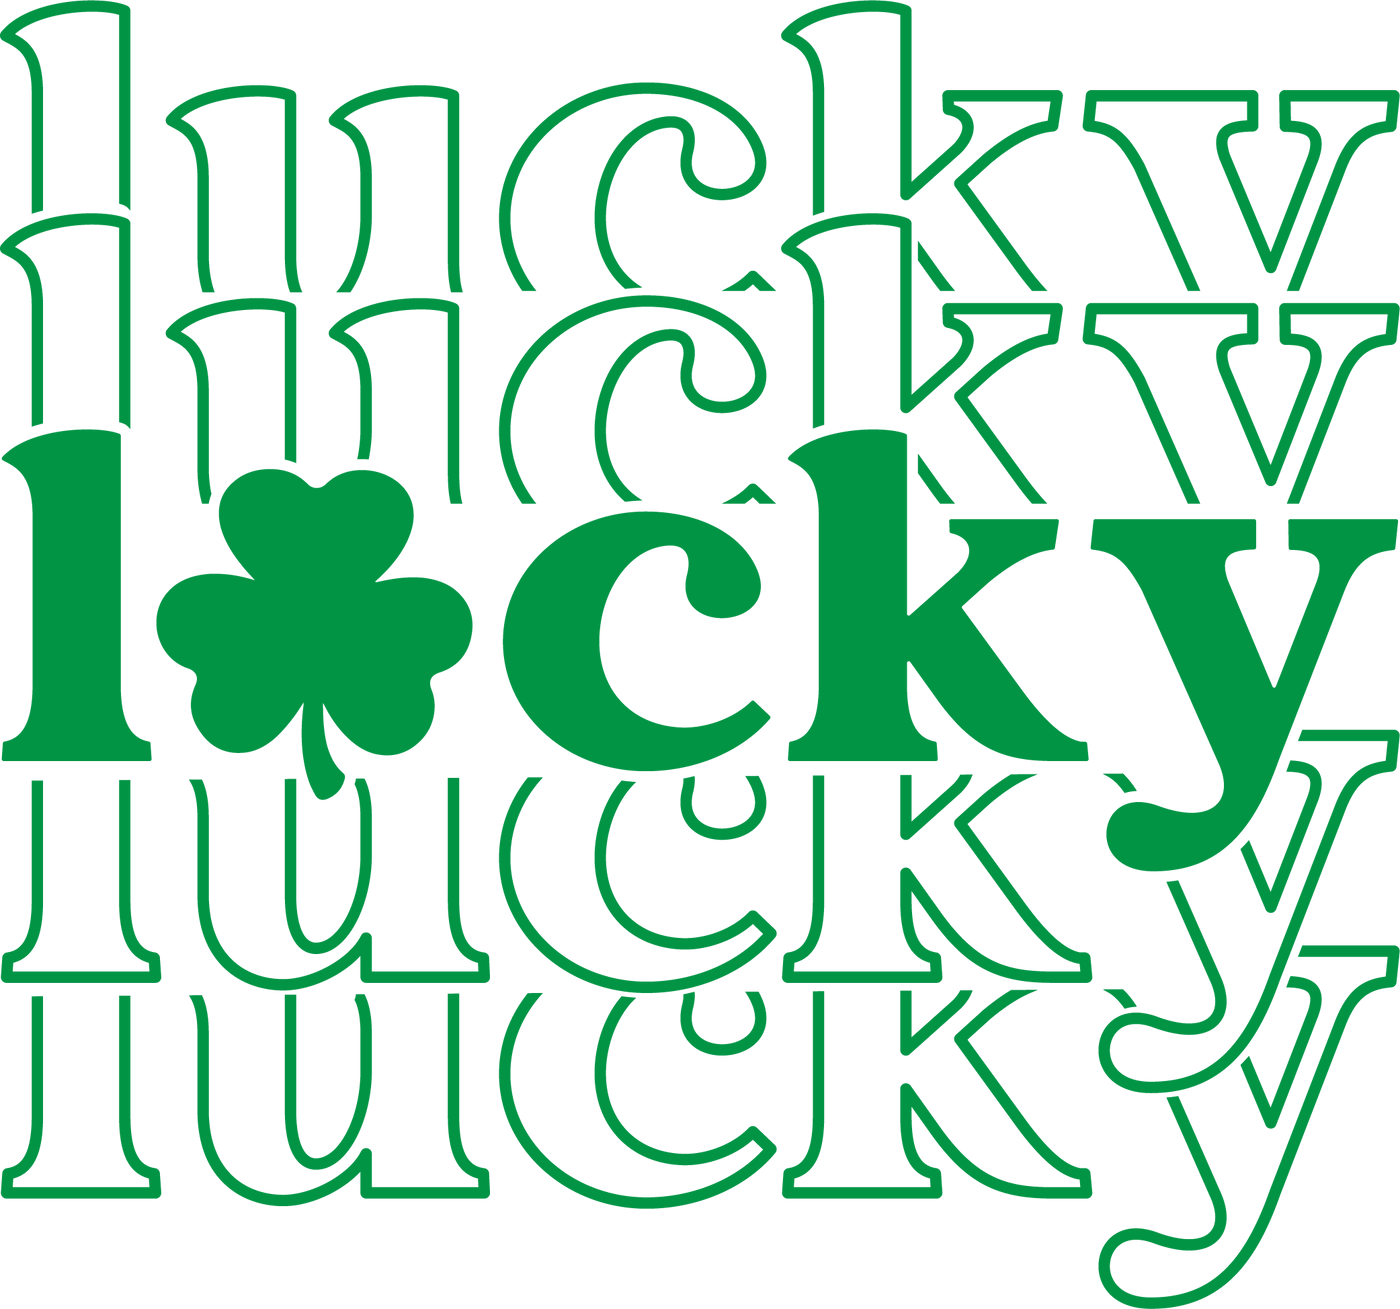 Lucky Lucky Lucky Hoodie